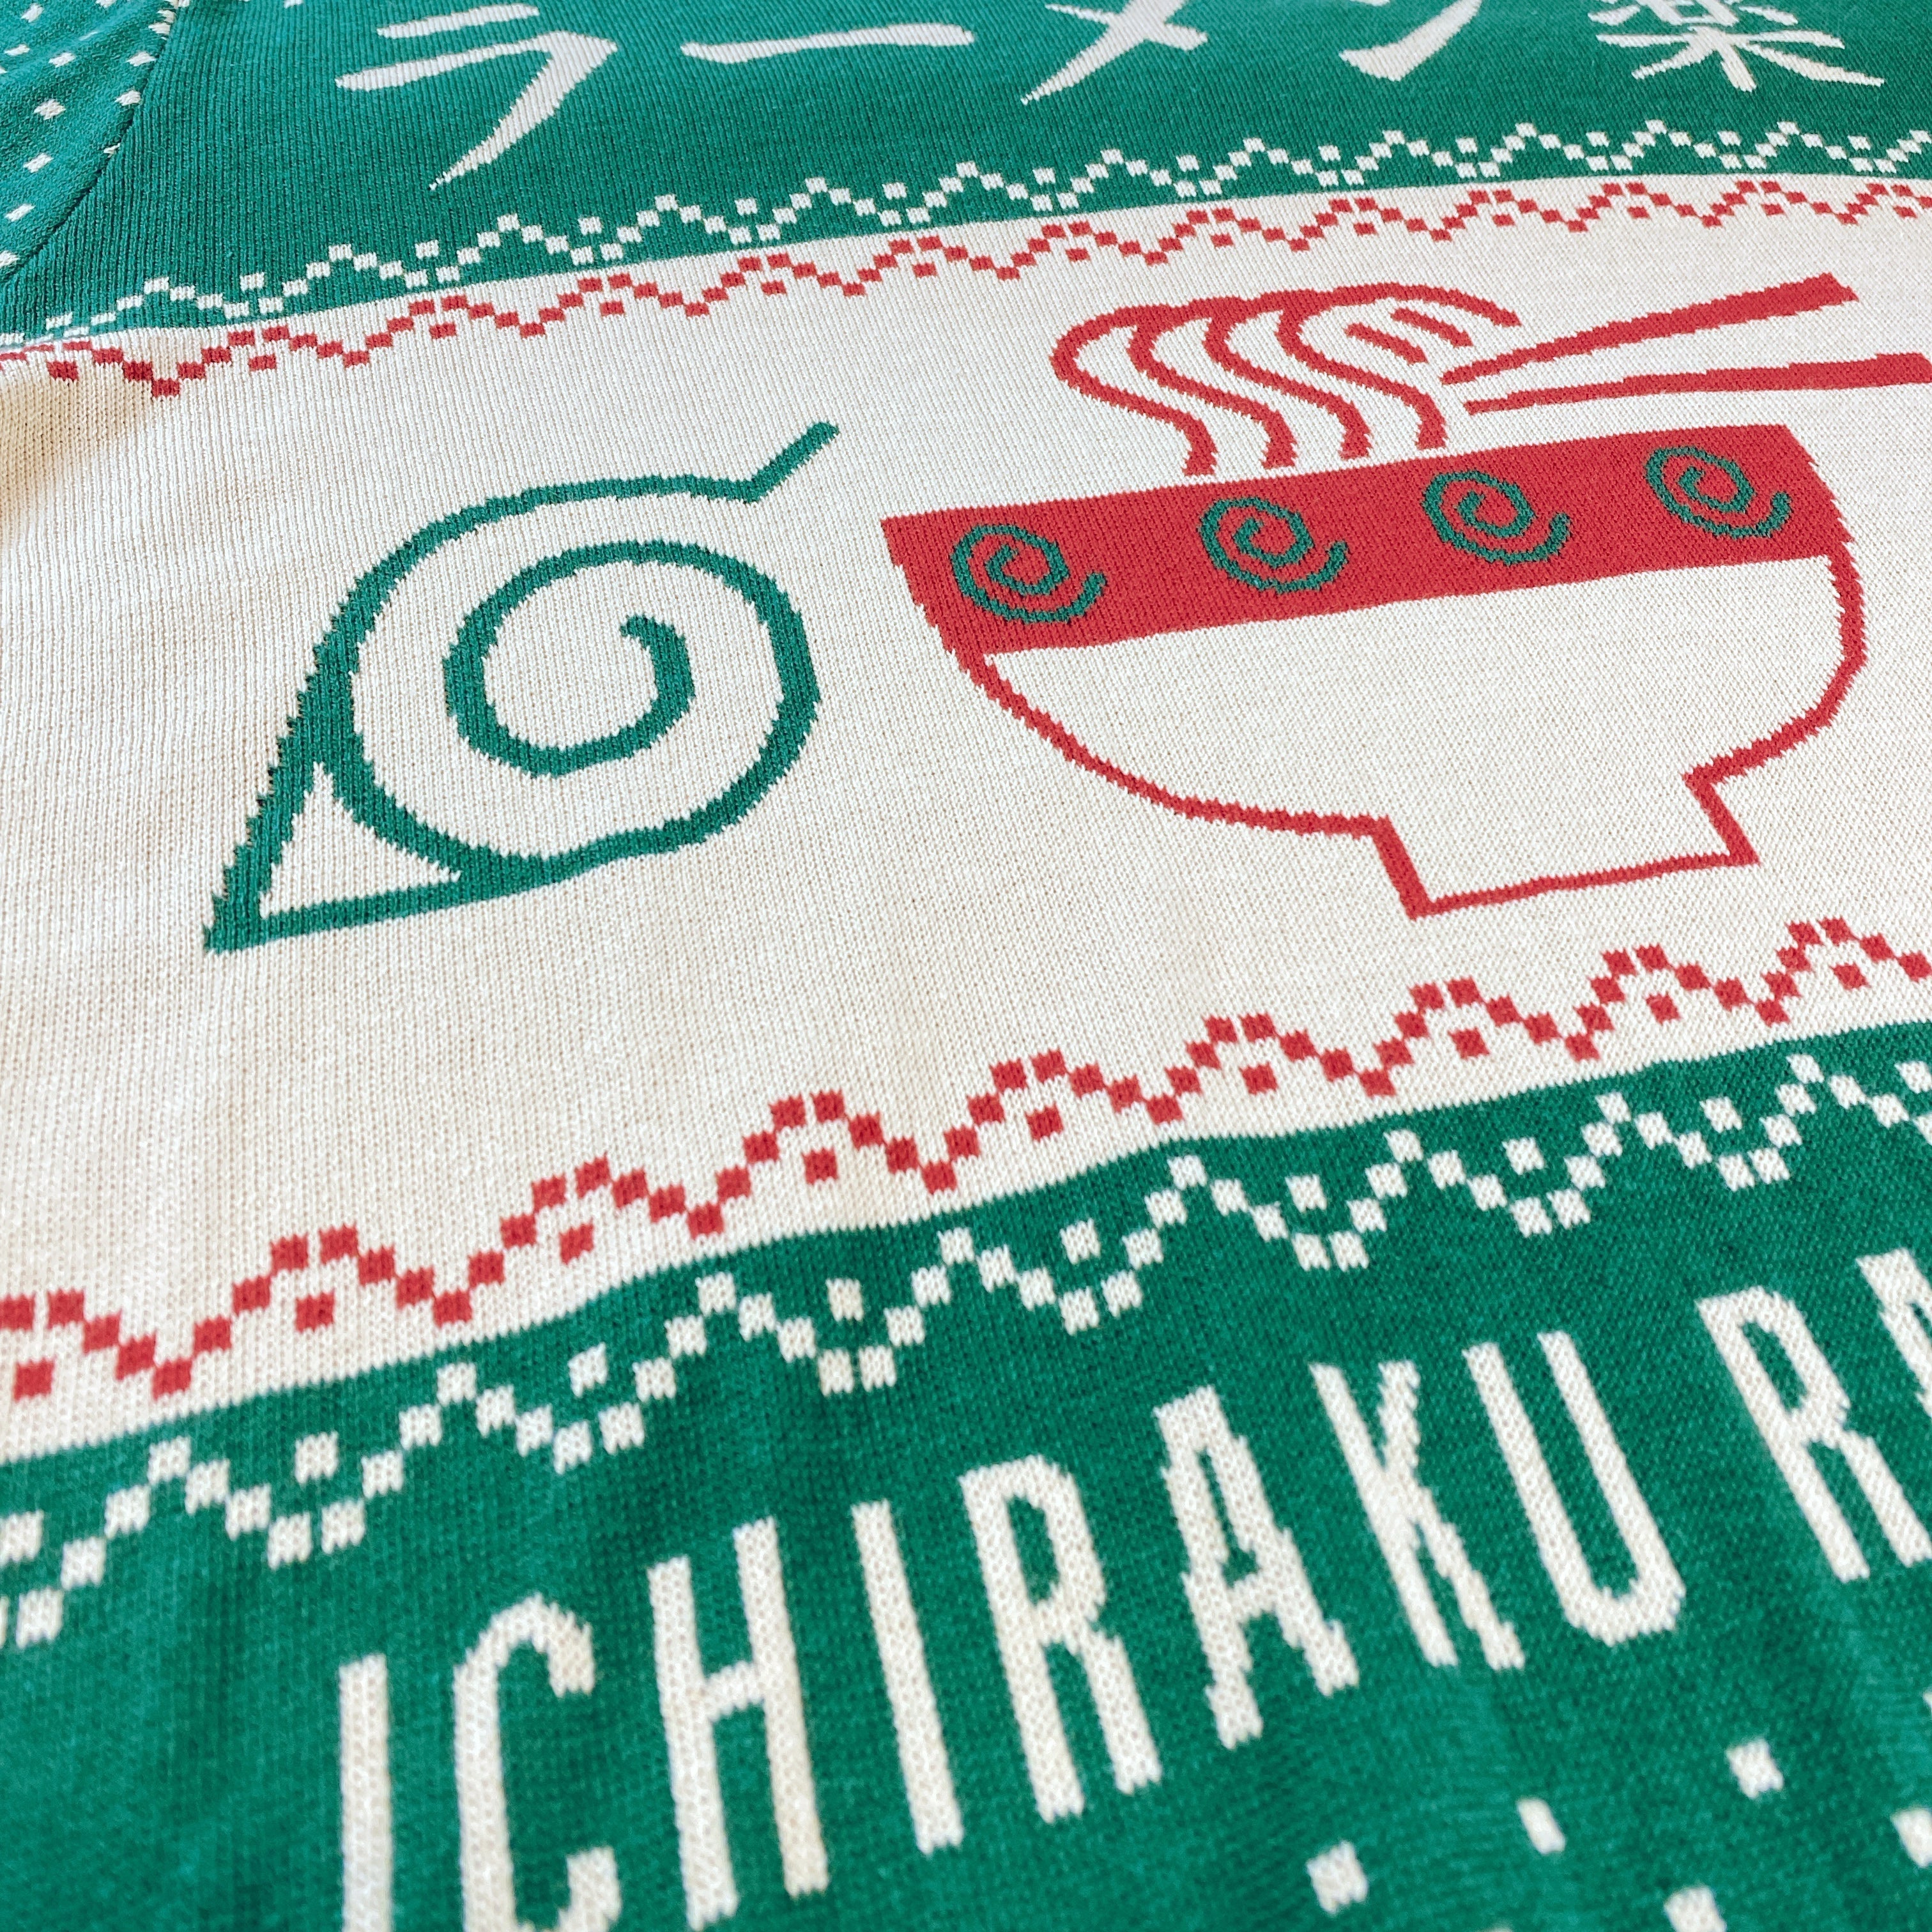 Naruto Shippuden - Ichiraku Ramen Shop Holiday Sweater - Crunchyroll Exclusive! image count 2